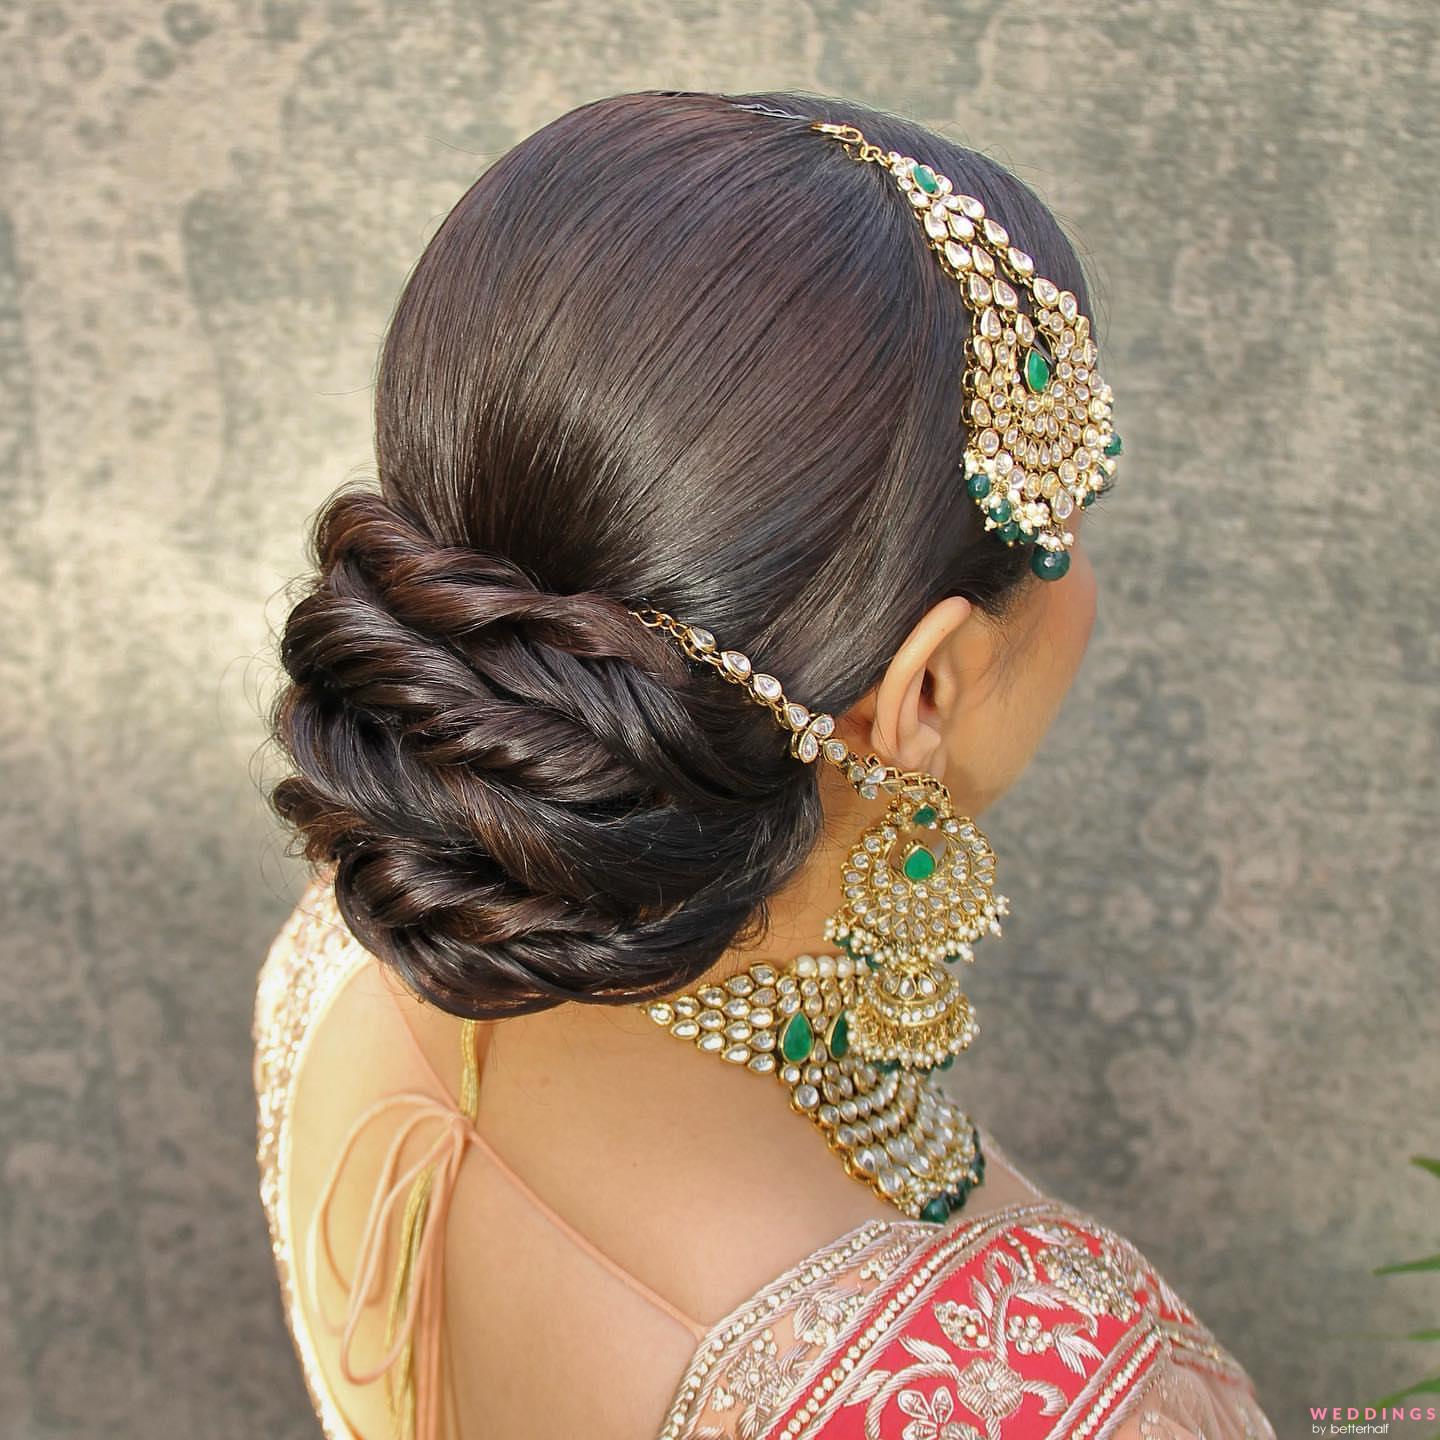 Hairbun Indian wedding hairstyles #floralbun #messybun #hairstyles #bridal  | Indian wedding hairstyles, Side bun hairstyles, Wedding hairstyles